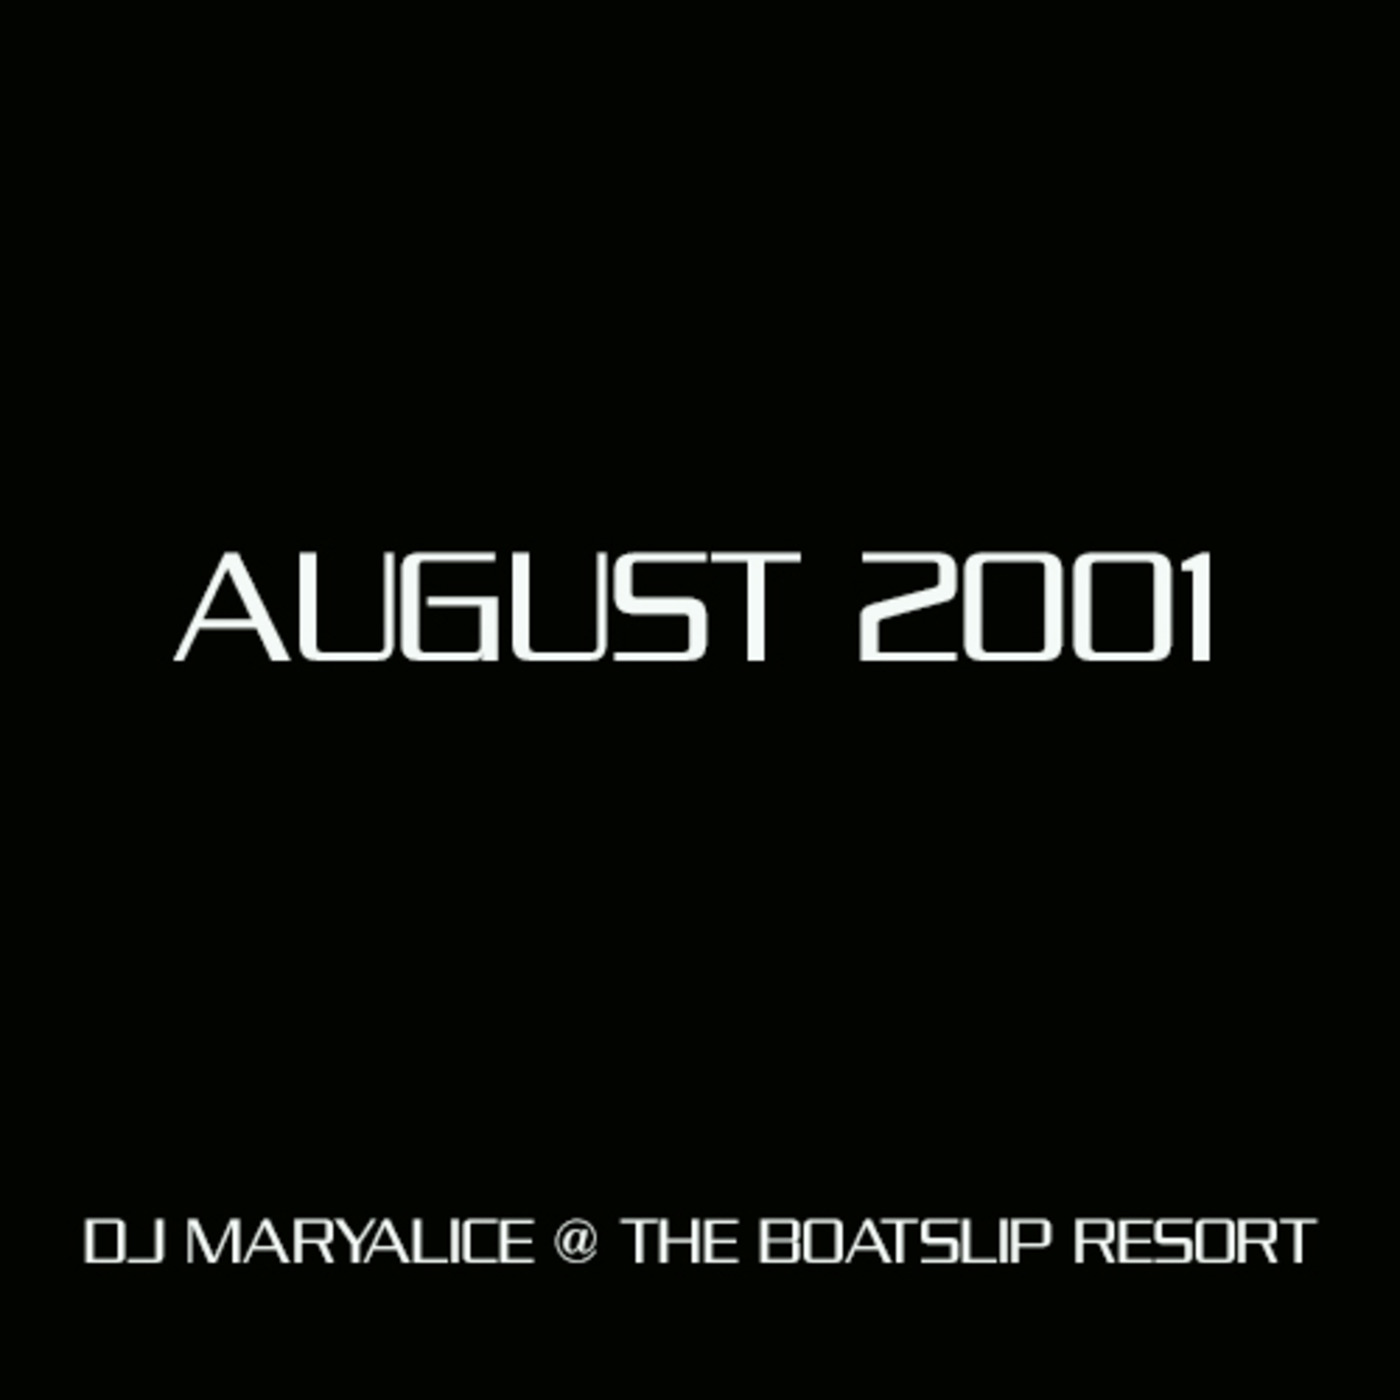 DJ Maryalice at the Boatslip Resort : August 2001